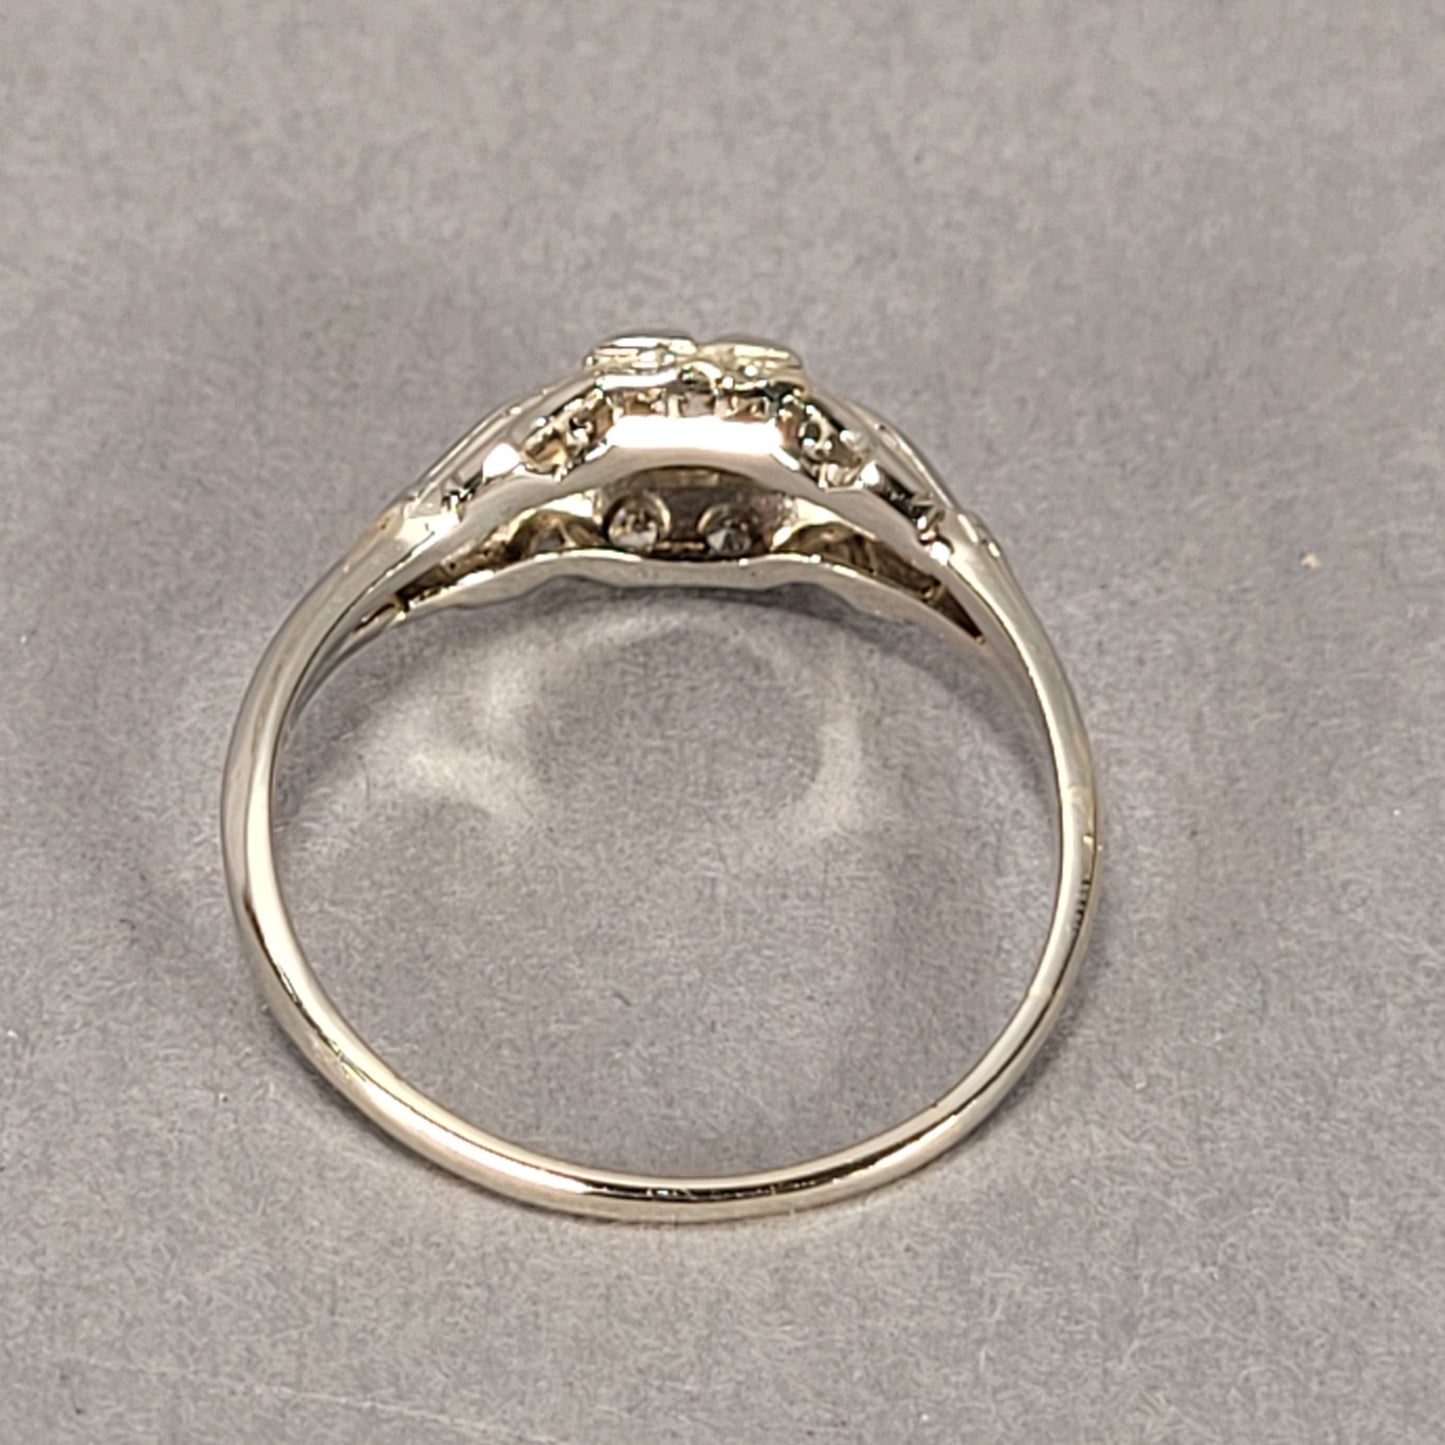 Lady's 18k White Gold & Diamond Ring 2.1g